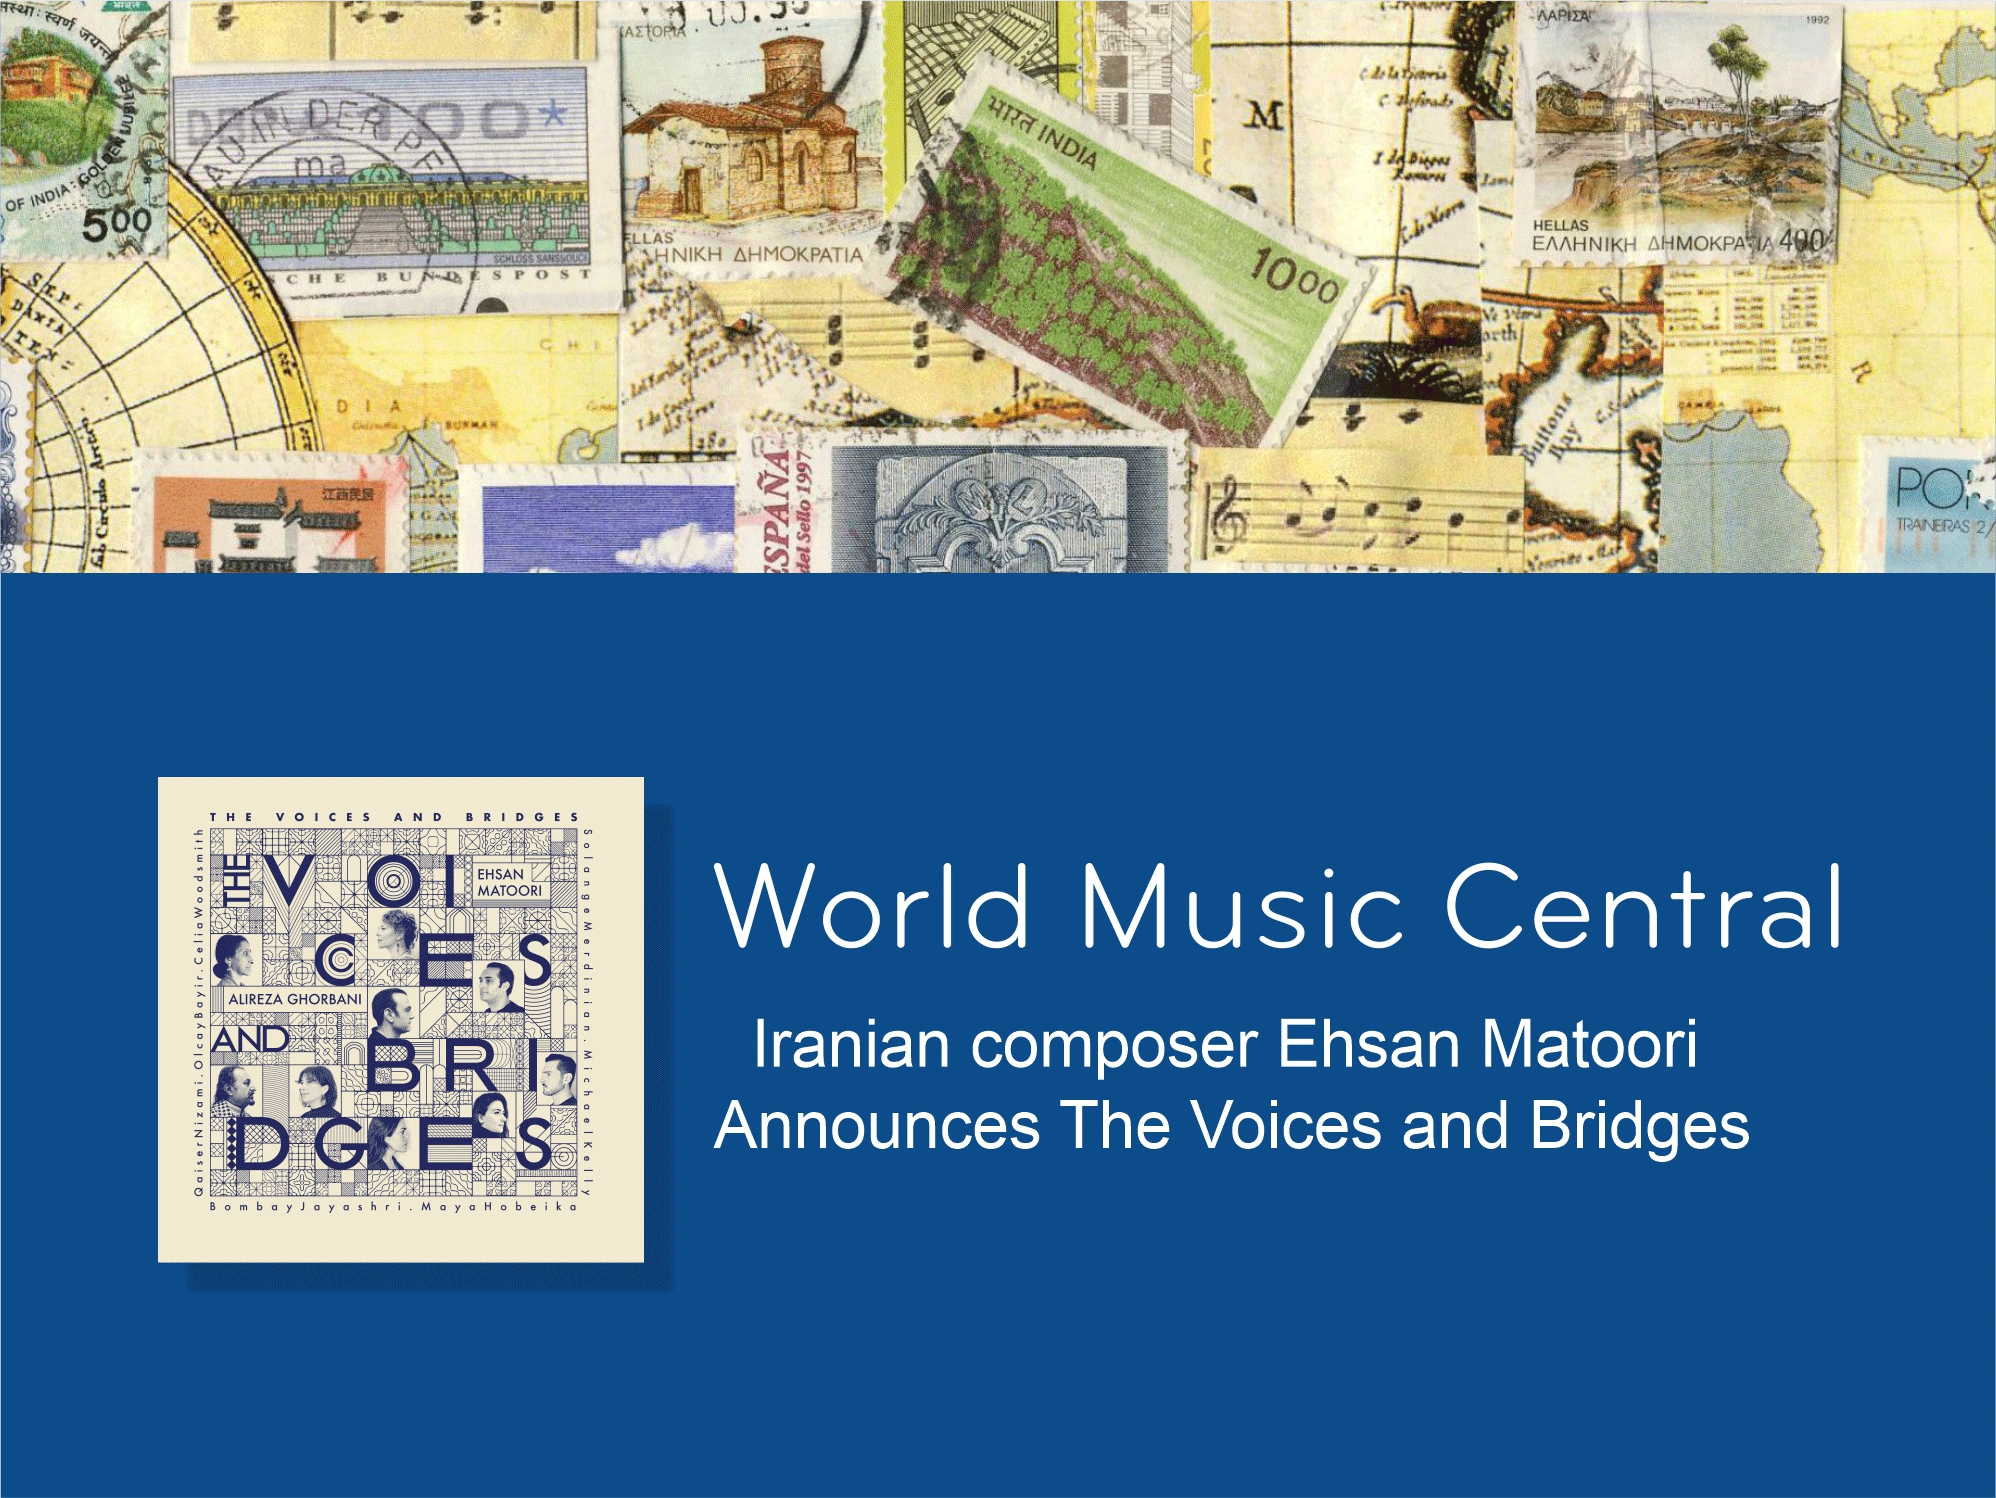 world music central: Iranian composer Ehsan Matoori Announces The Voices and Bridges